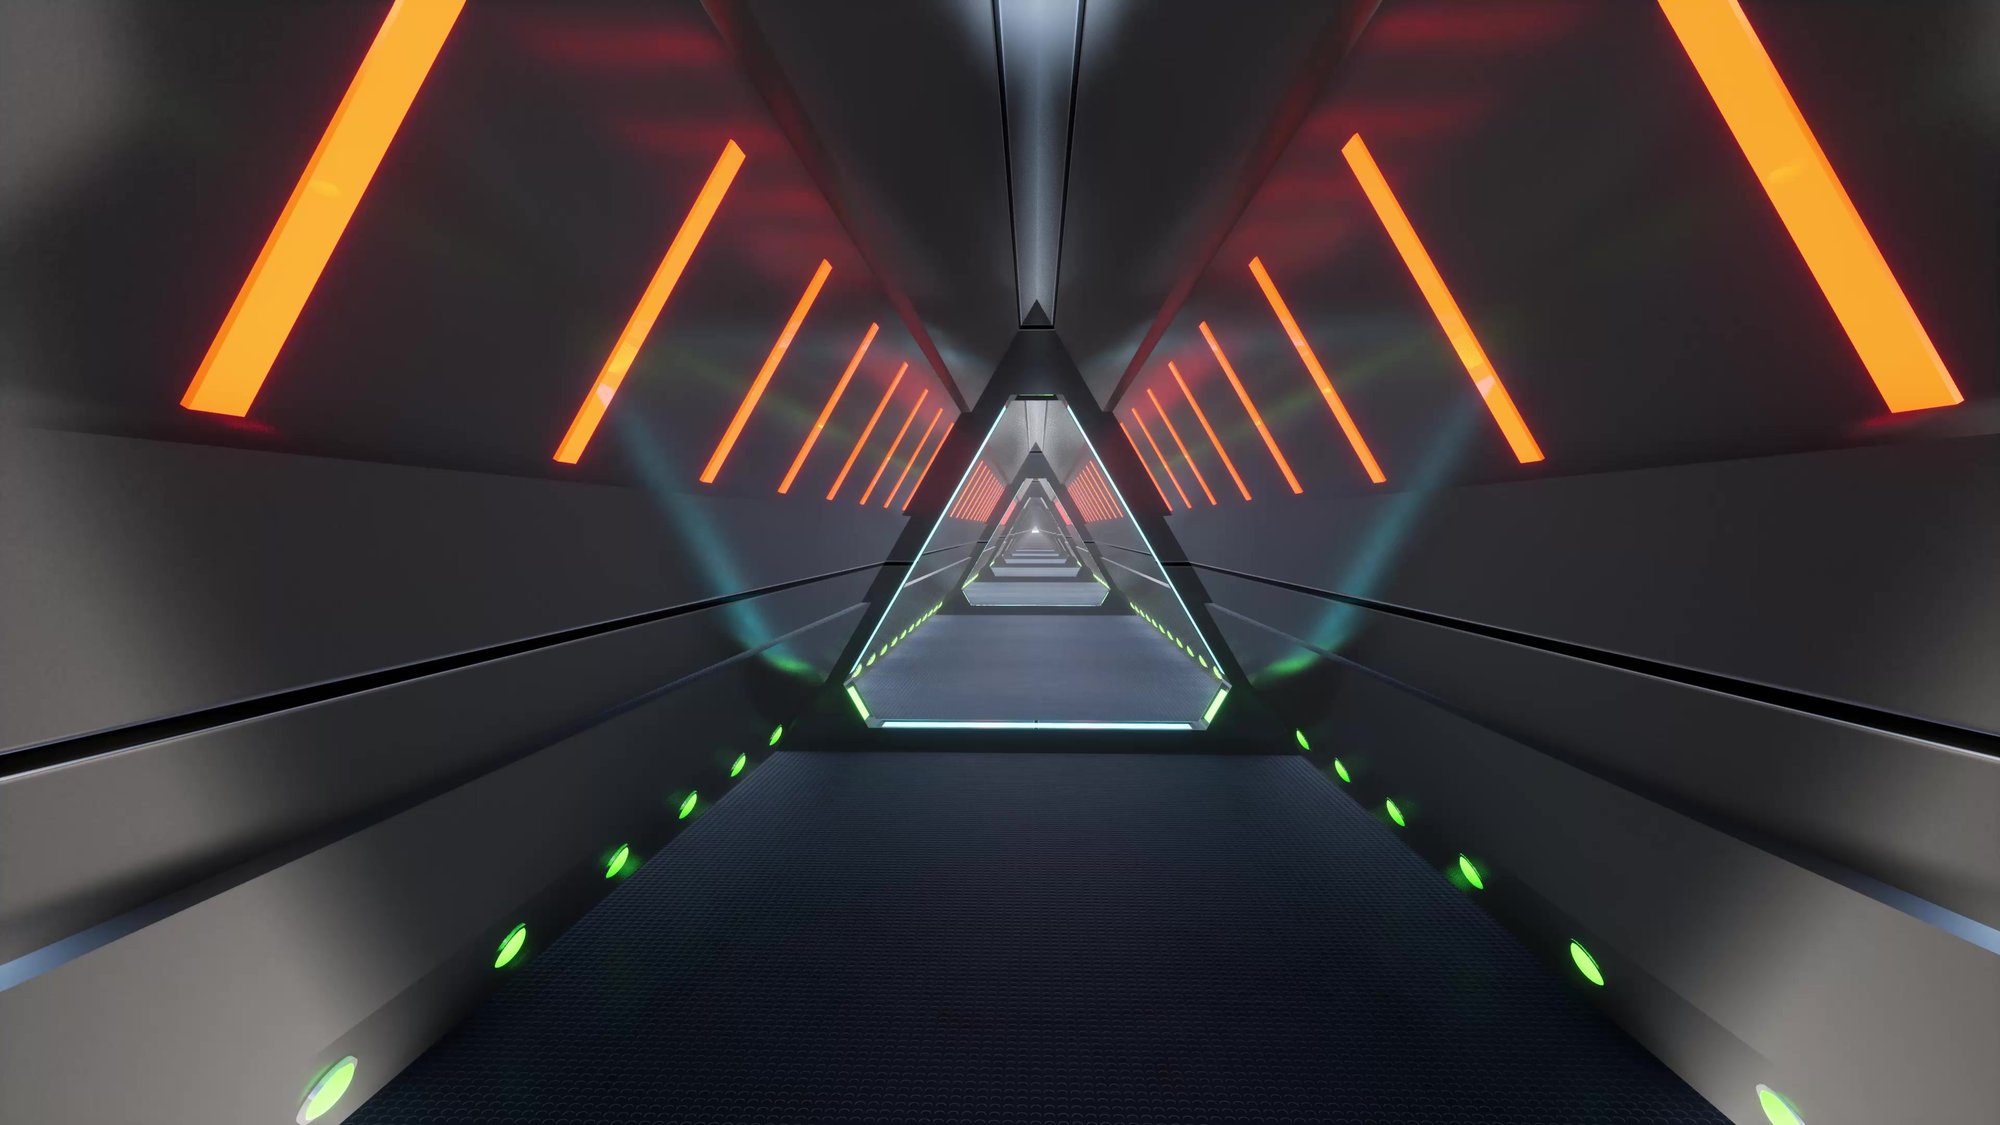 metal-tunnel-neon-future-tech-3d-minimal-motion-d-2022-11-17-16-02-44-utc